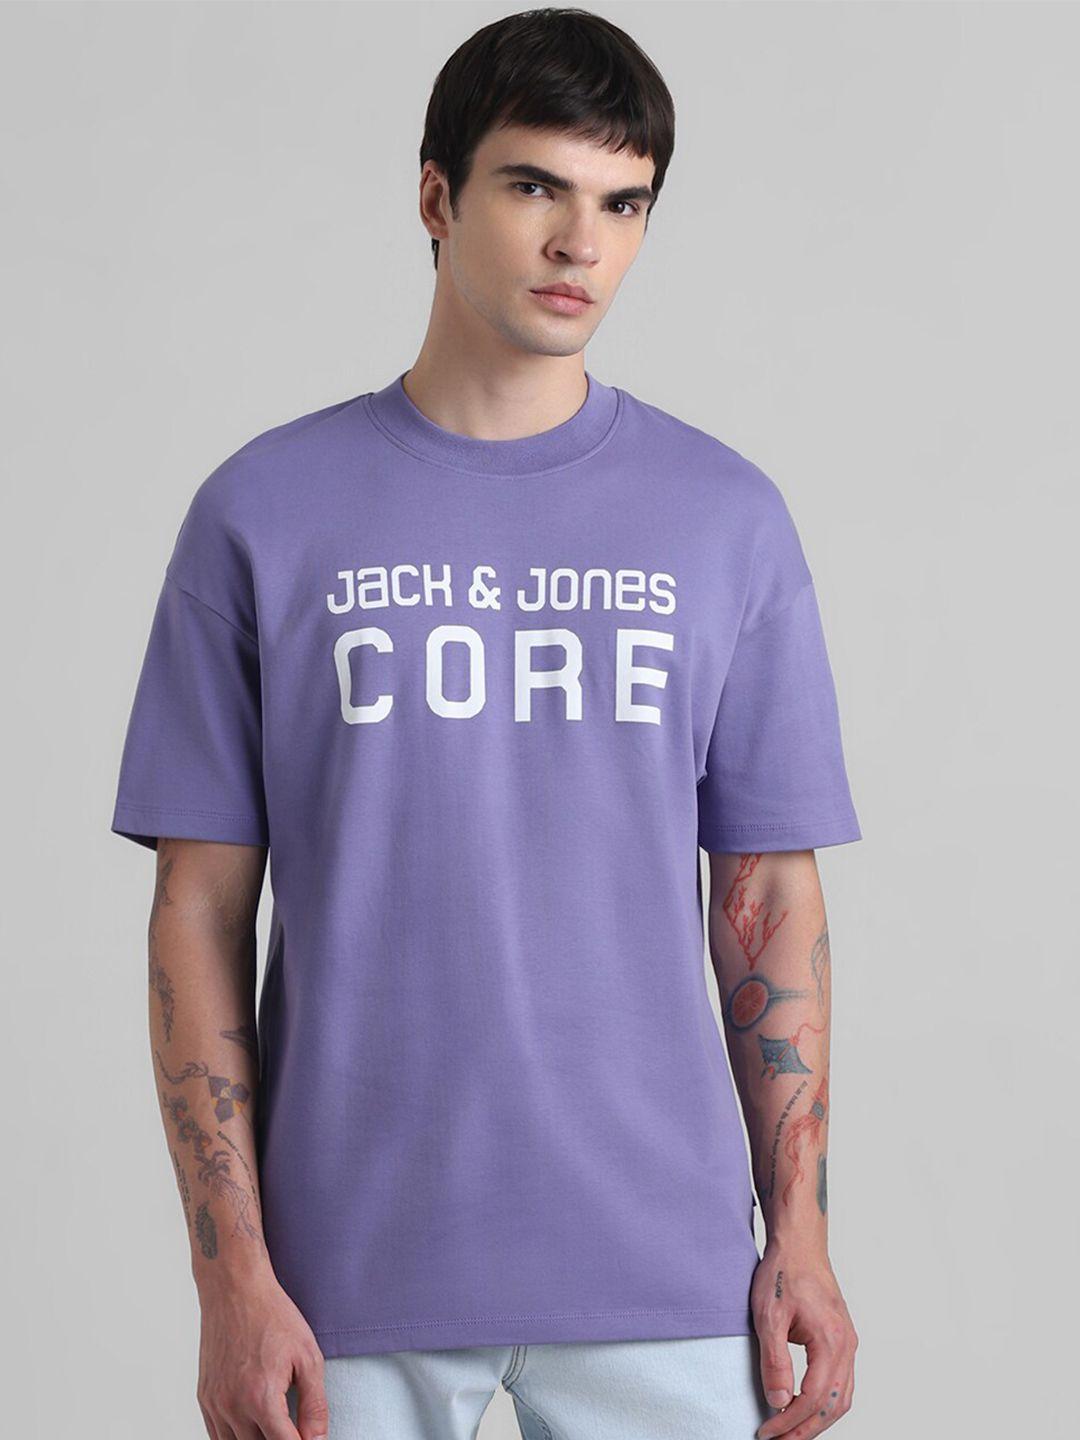 jack & jones typography printed pure cotton t-shirt